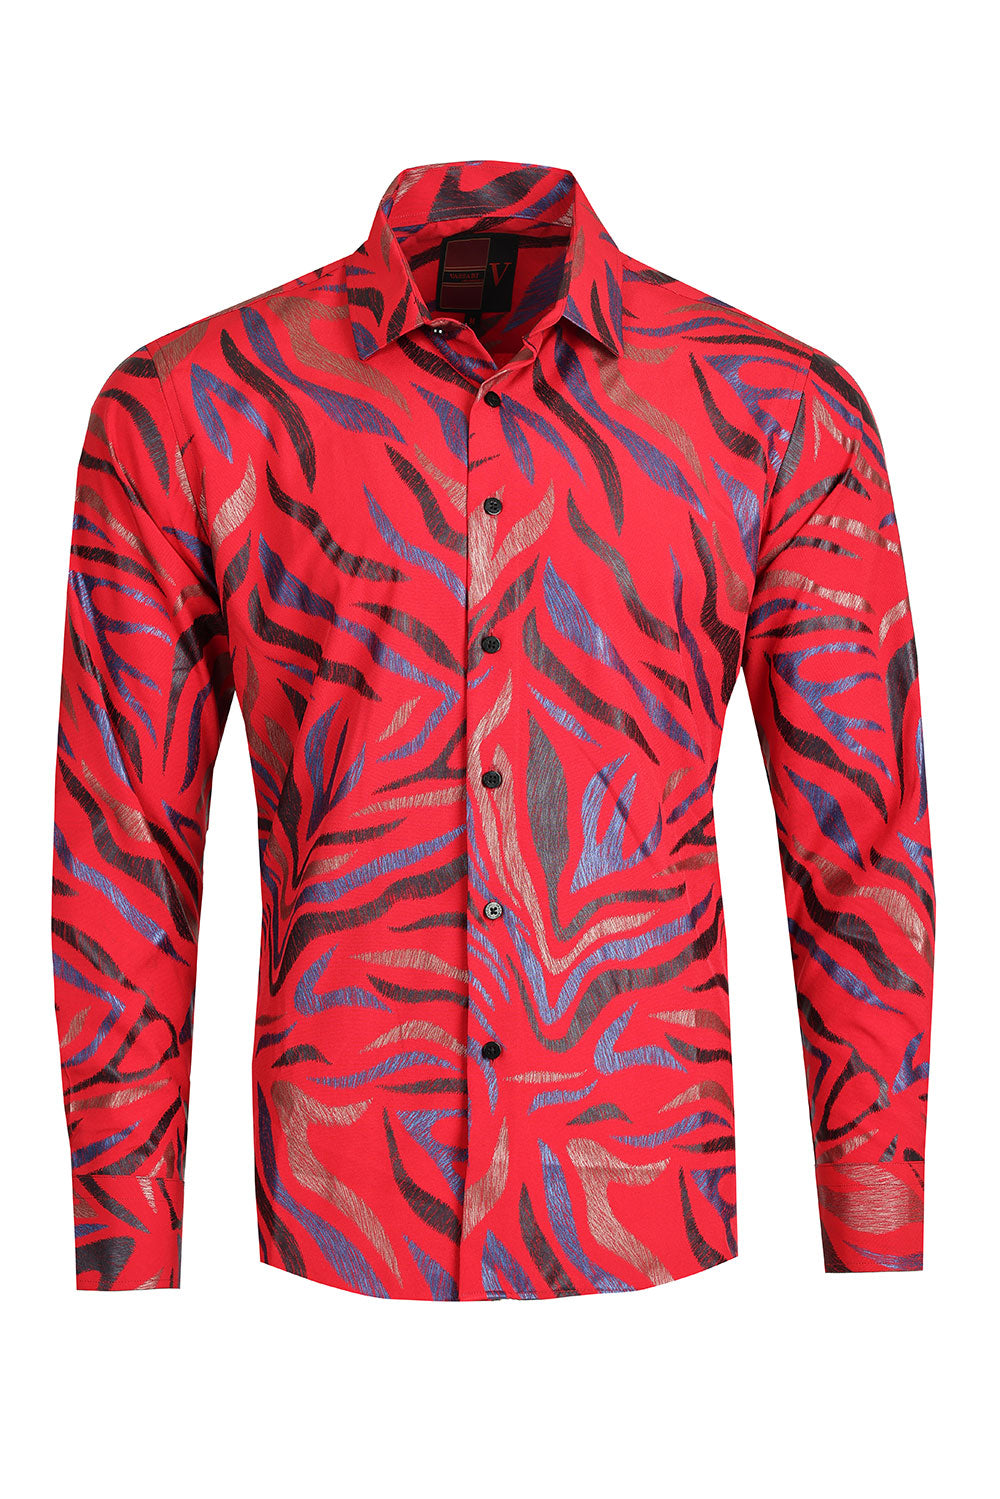 Men's Leaf Illustration Print Design Button Down Luxury Shirts 2VS178 Red